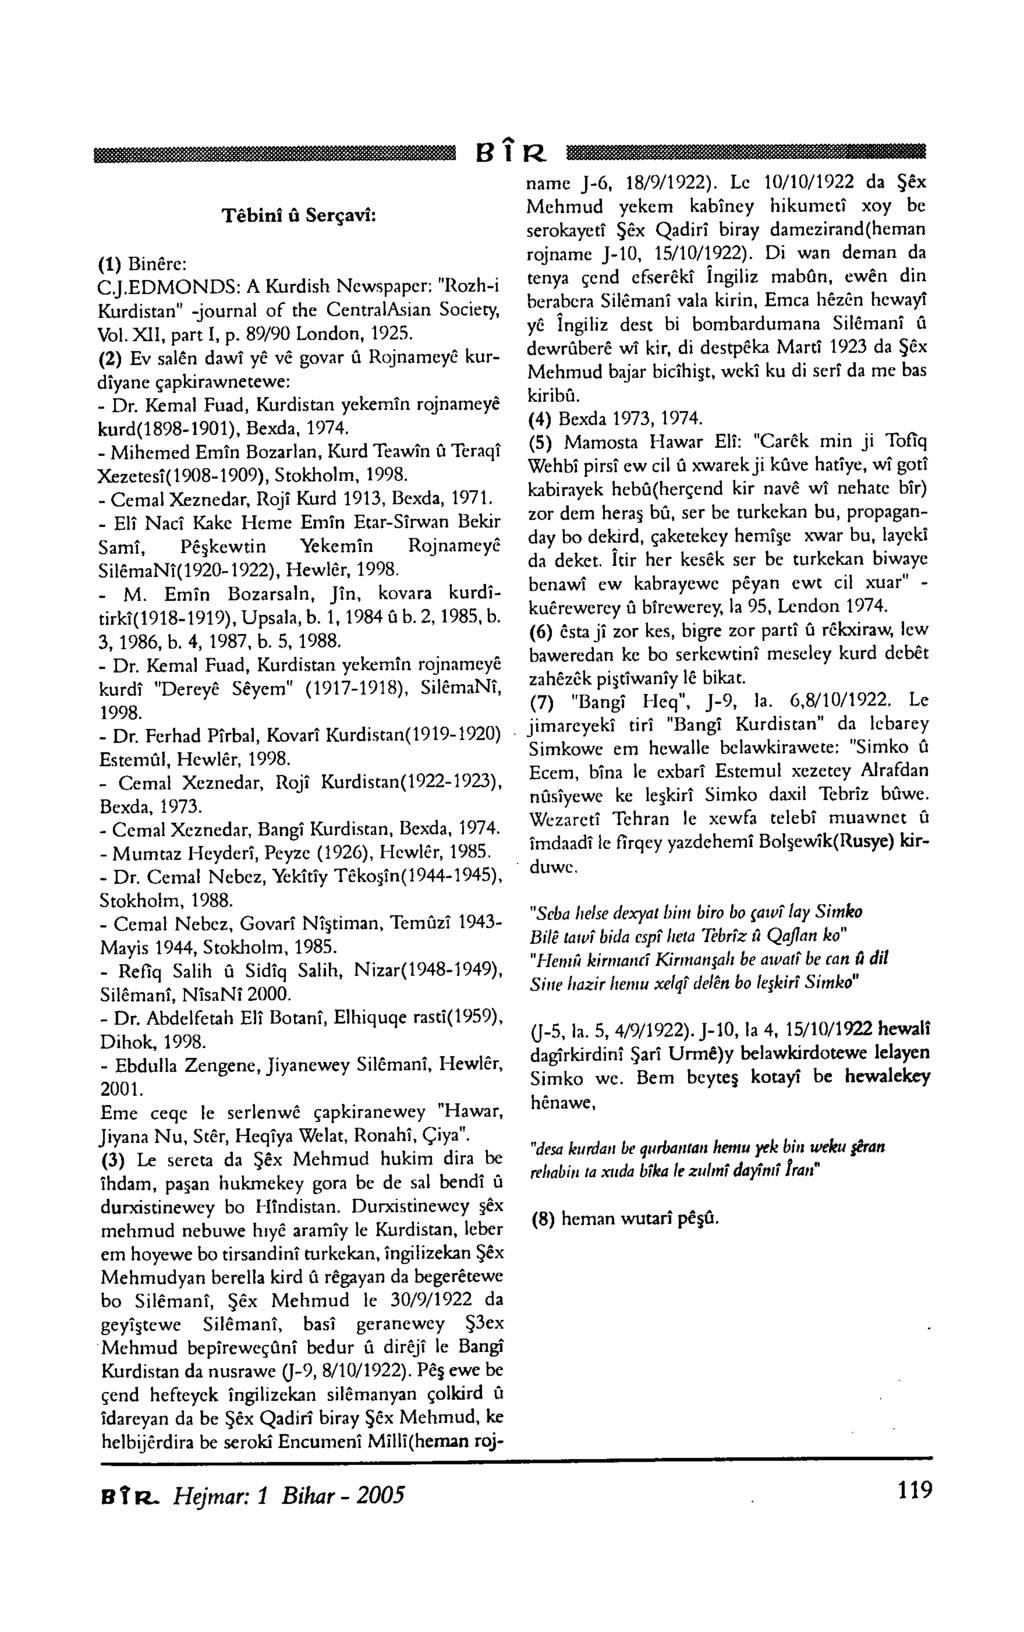 name J-6, 18/9/1922). Le 10/10/1922 da Şêx Têbinî û Serçavî: (1) Binêre: C.J.EDMONDS: A Kurdish Newspaper: "Rozh-i Kürdistan" -journal of the CentralAsian Society, Vol. XII, part I, p.